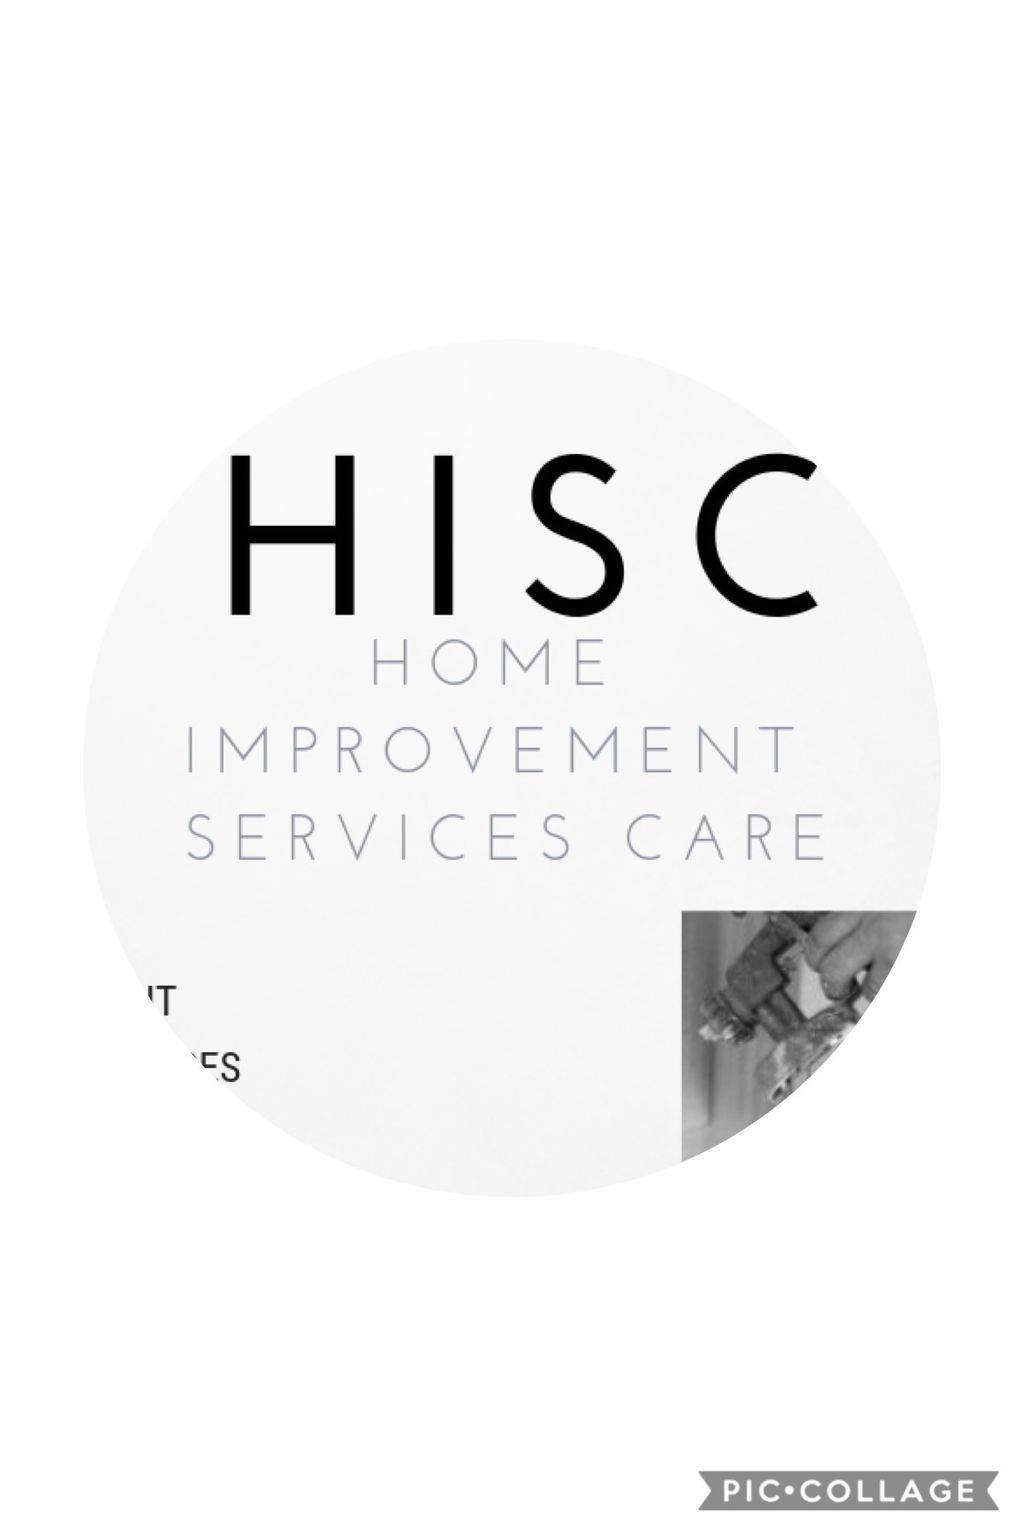 HISC - Home Improvement Services Care LLC